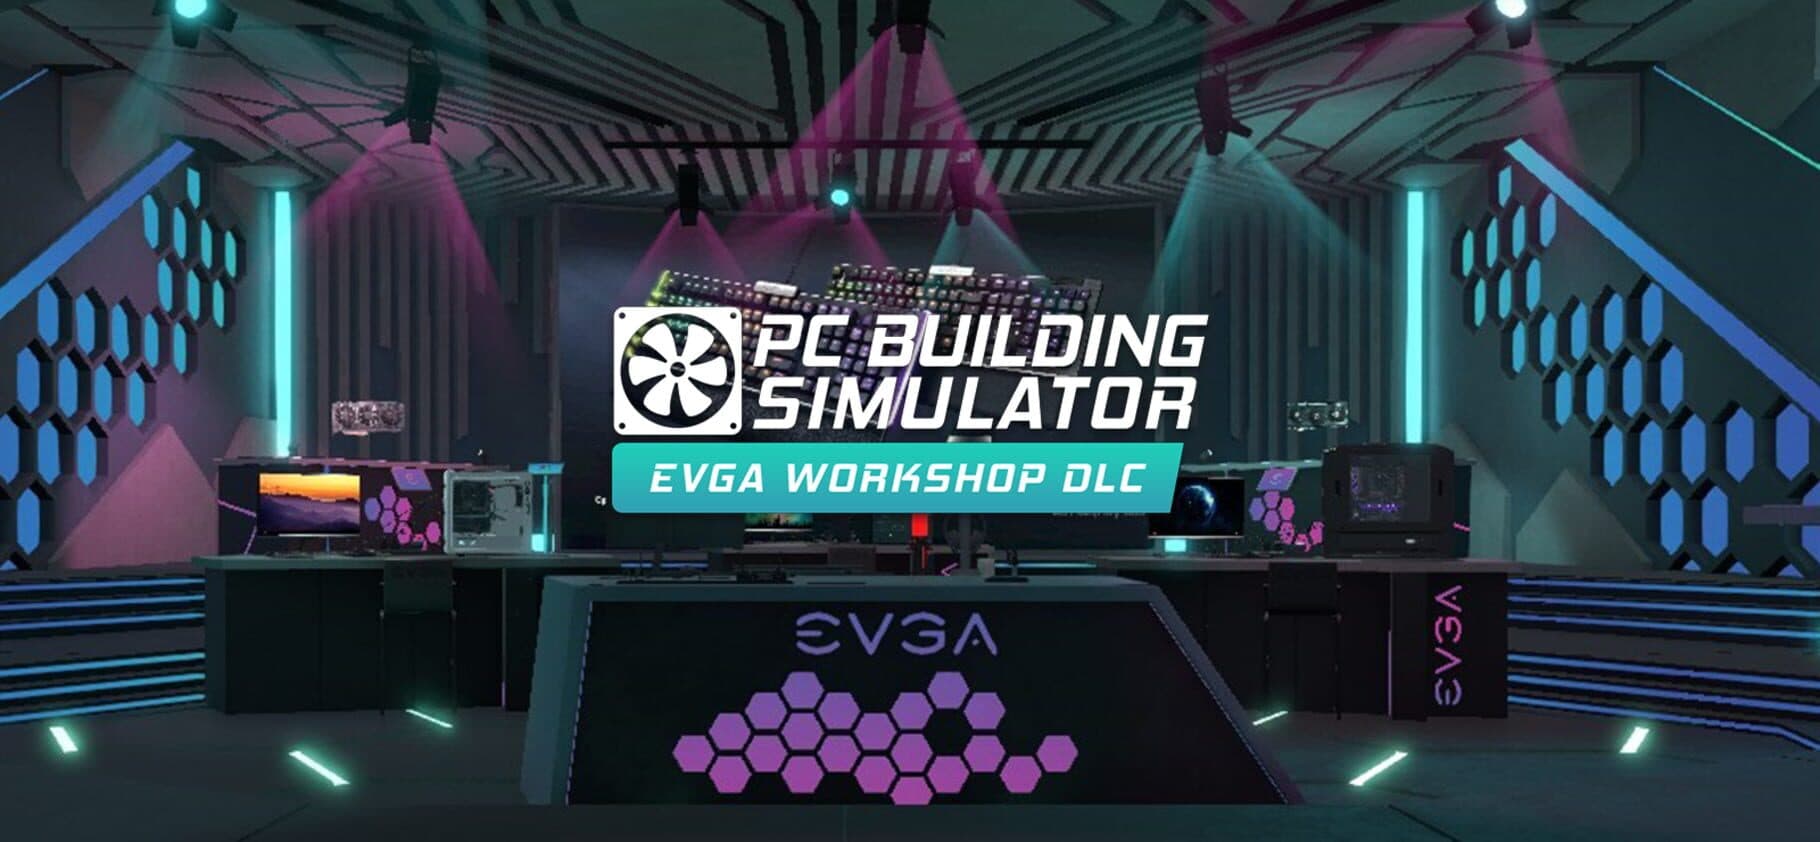 PC Building Simulator: Evga Workshop Image